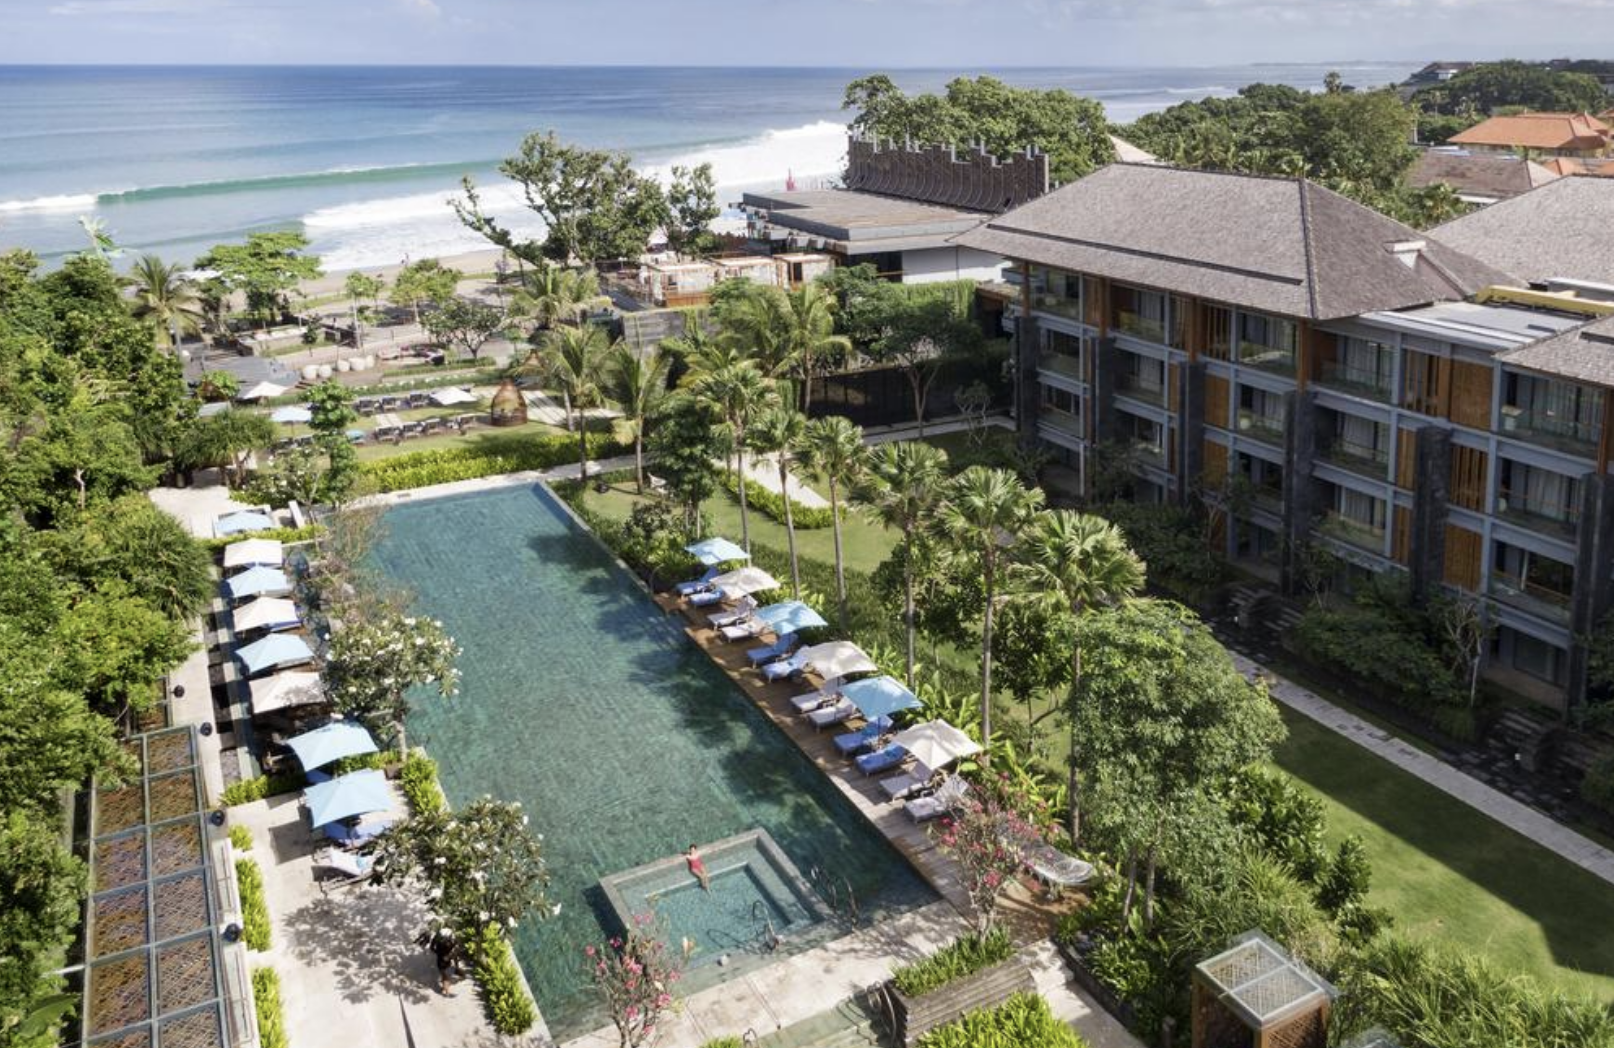 Hotel indigo in Bali